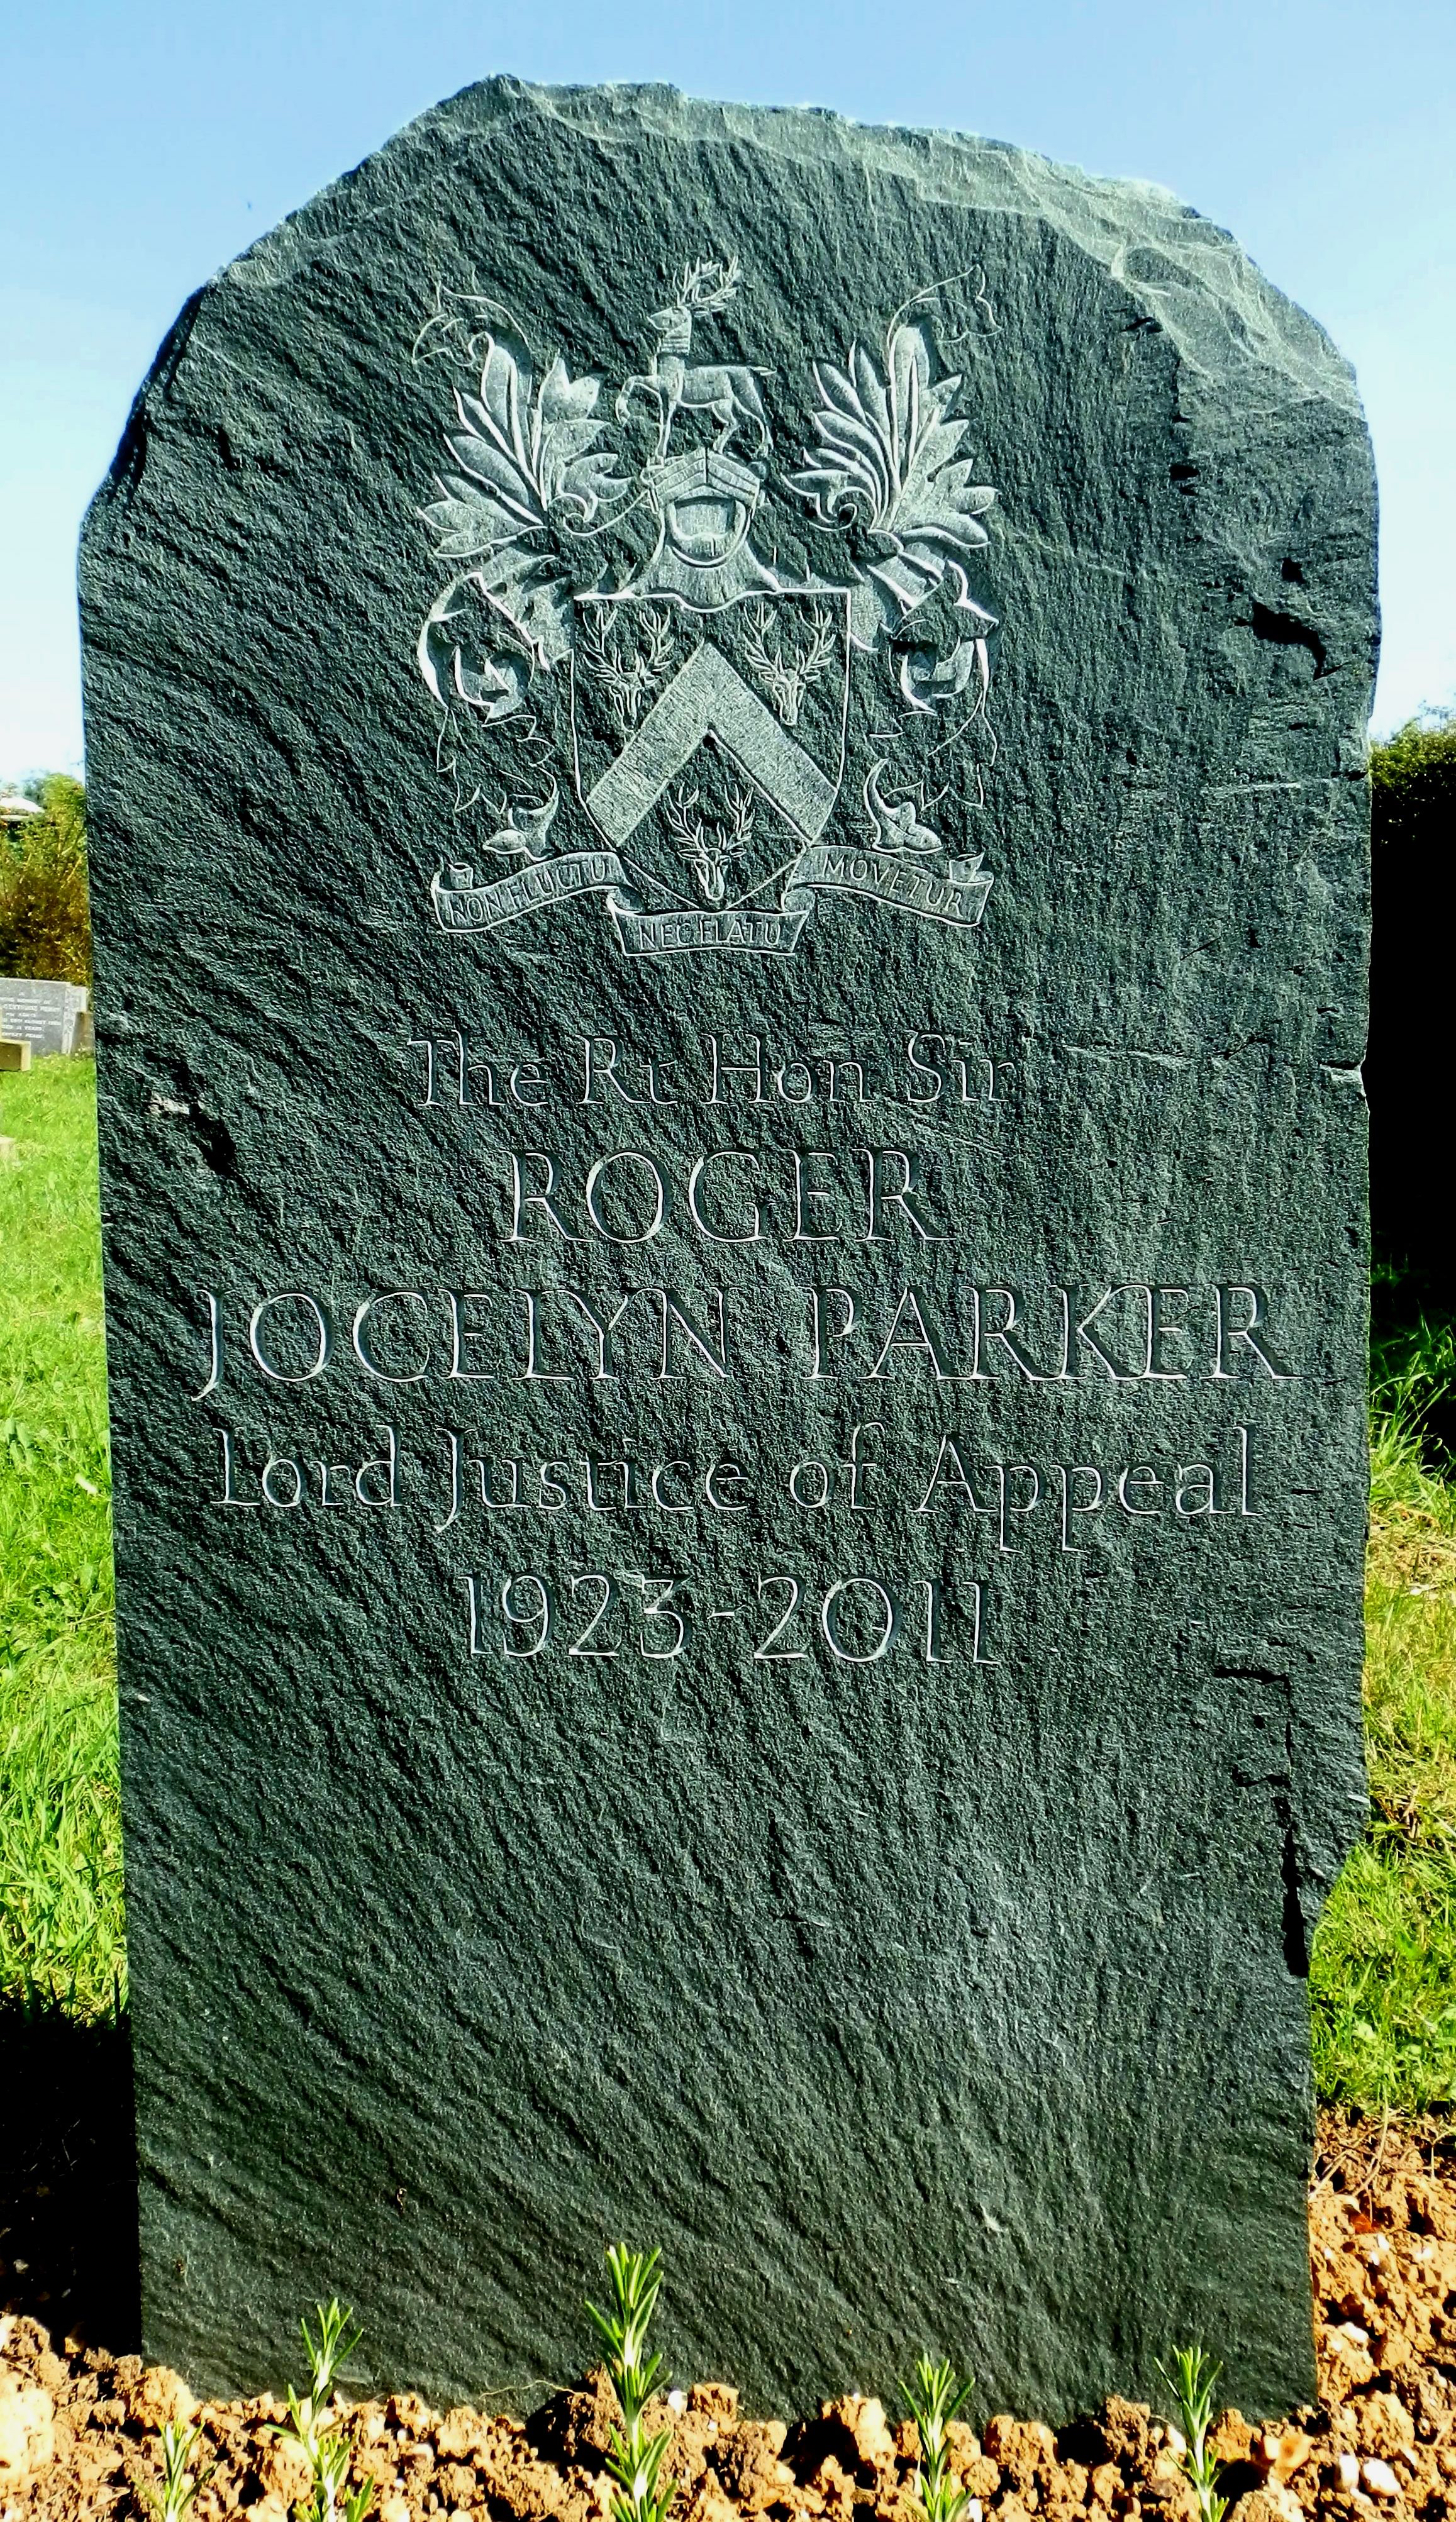 Headstone on riven Honister slate